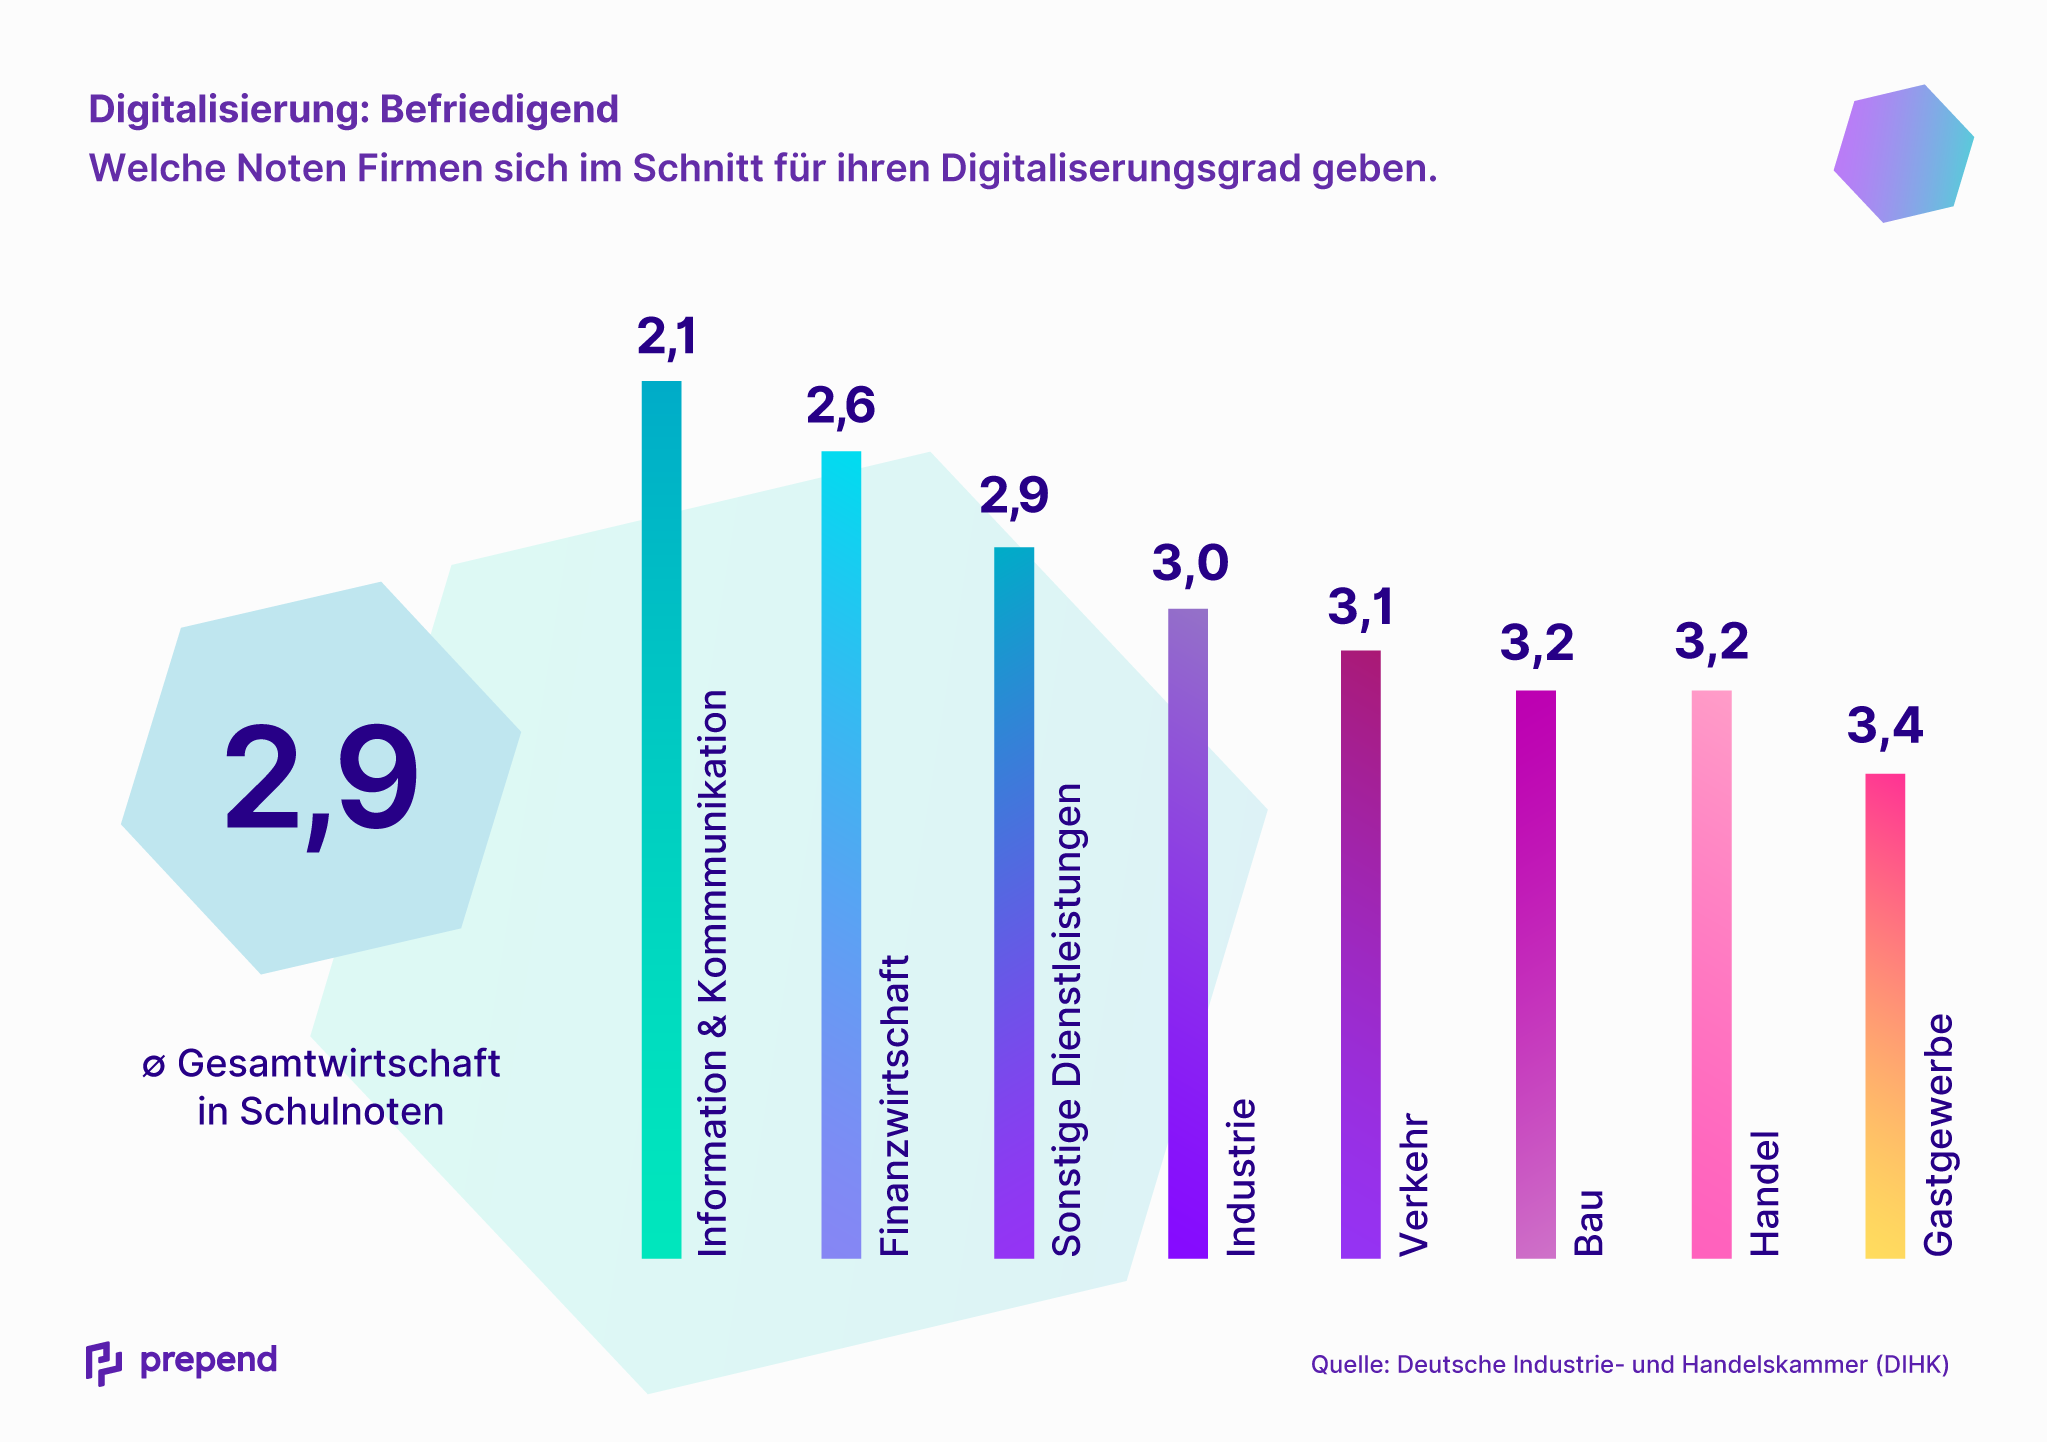 Infographic: Digitalization German Companies